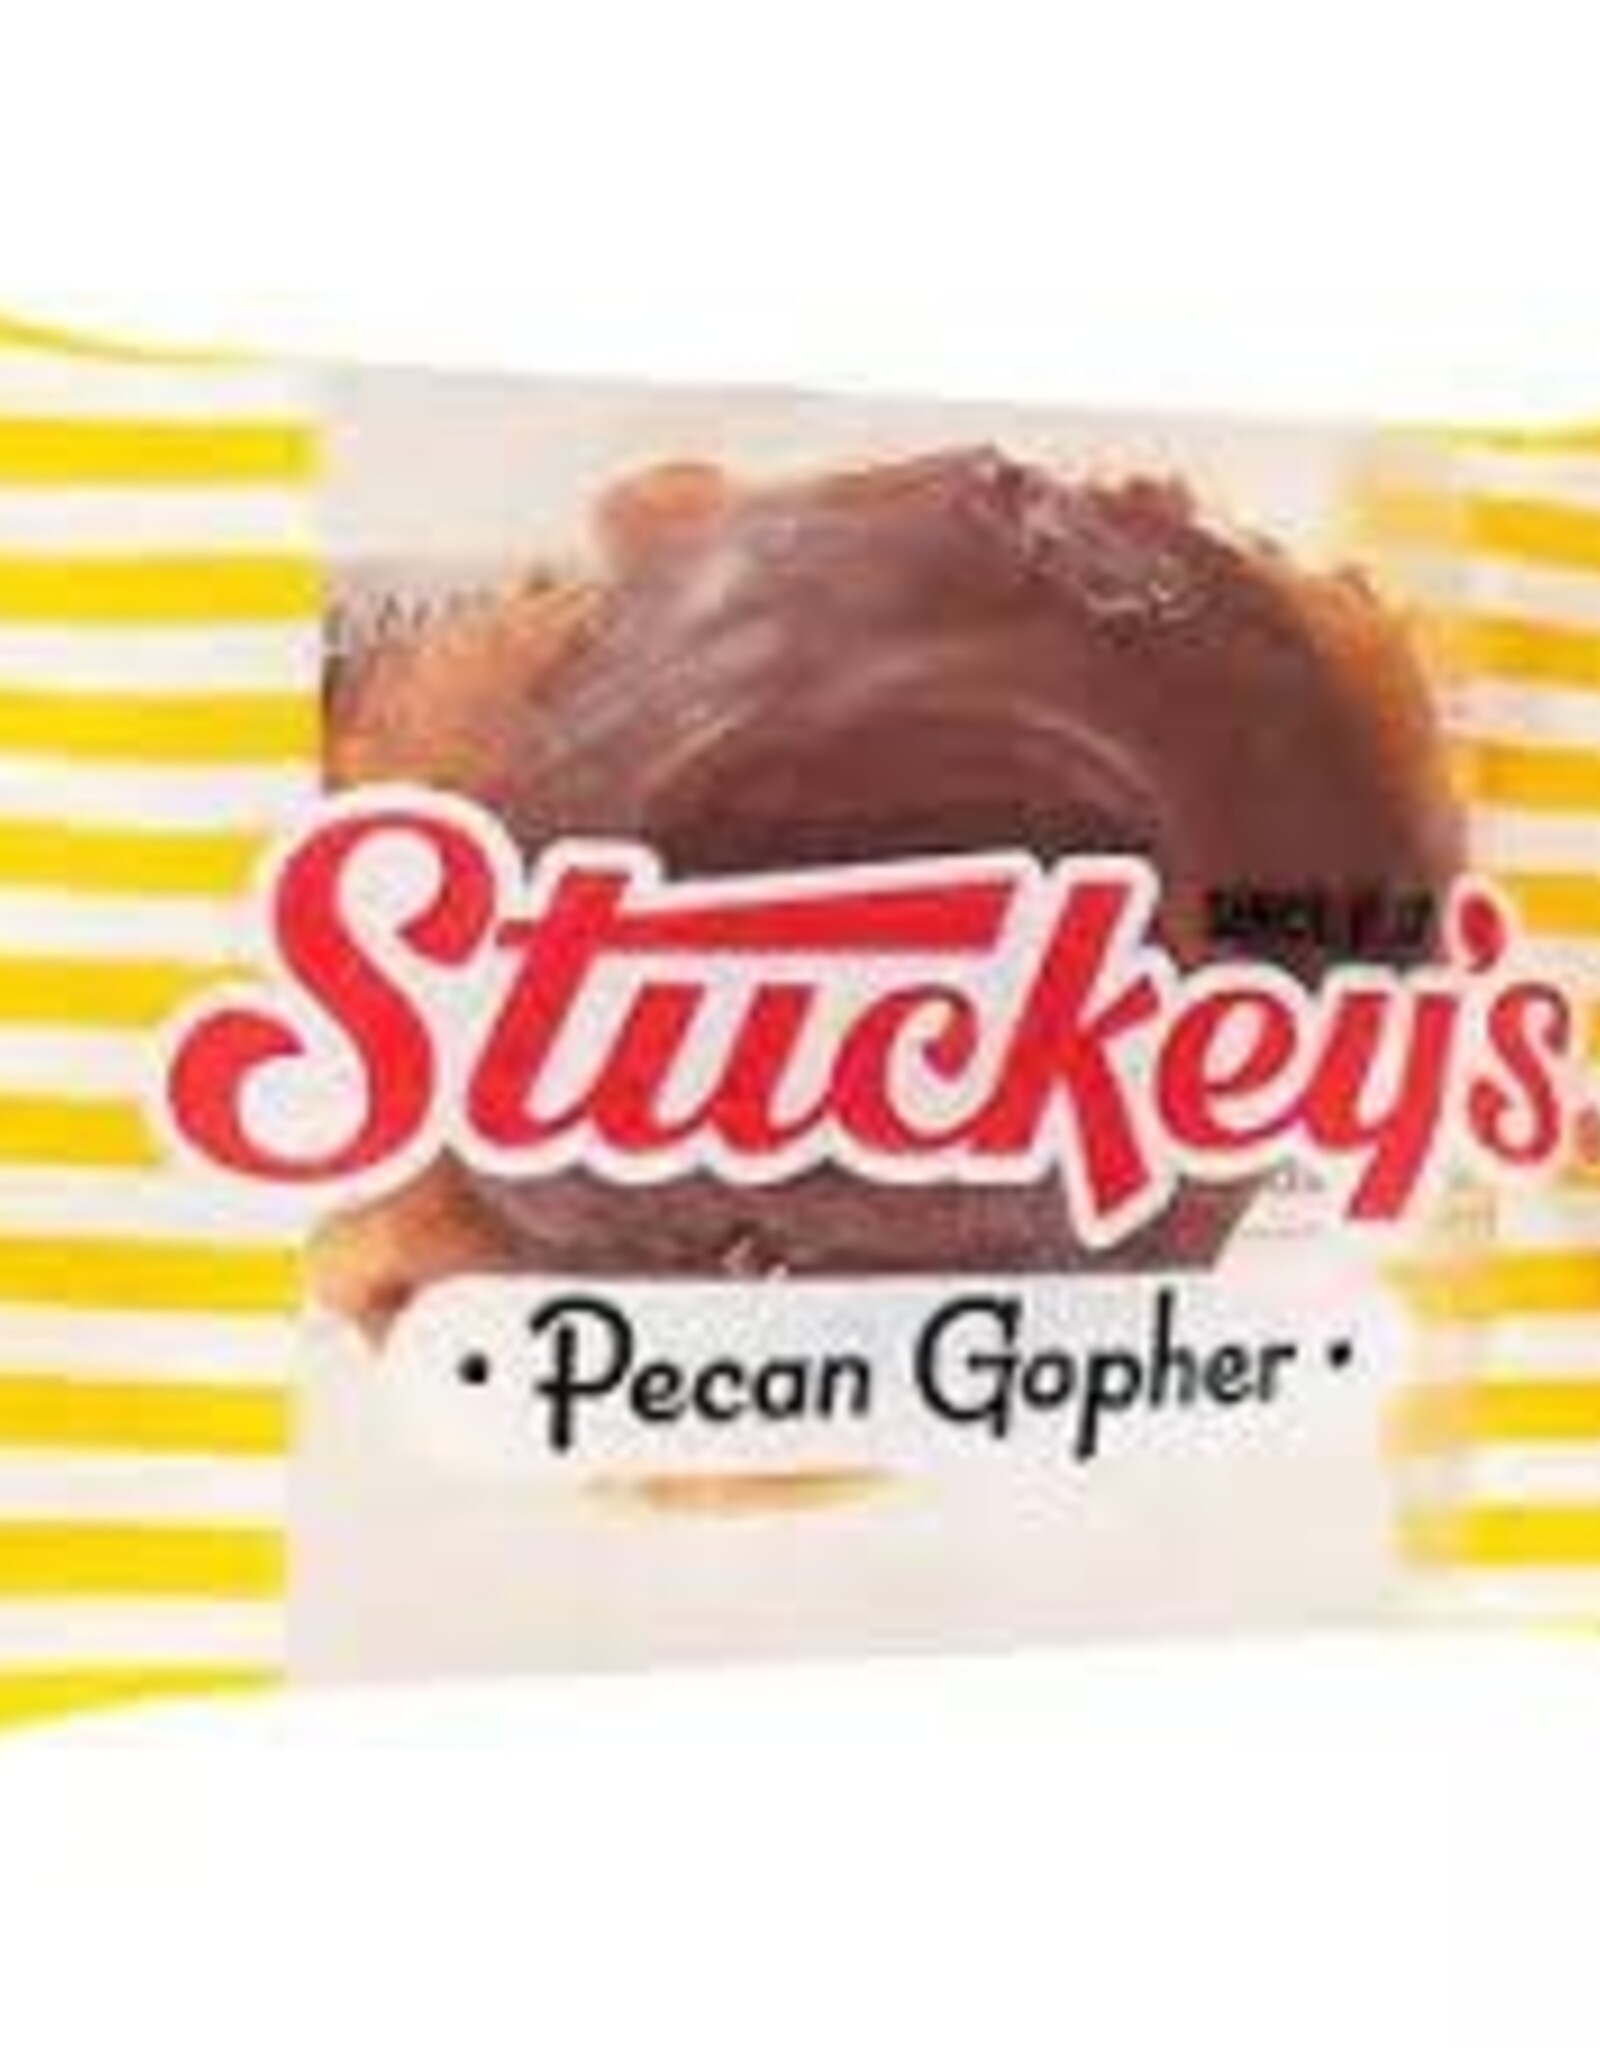 Candy Stuckey's - Pecan Gopher